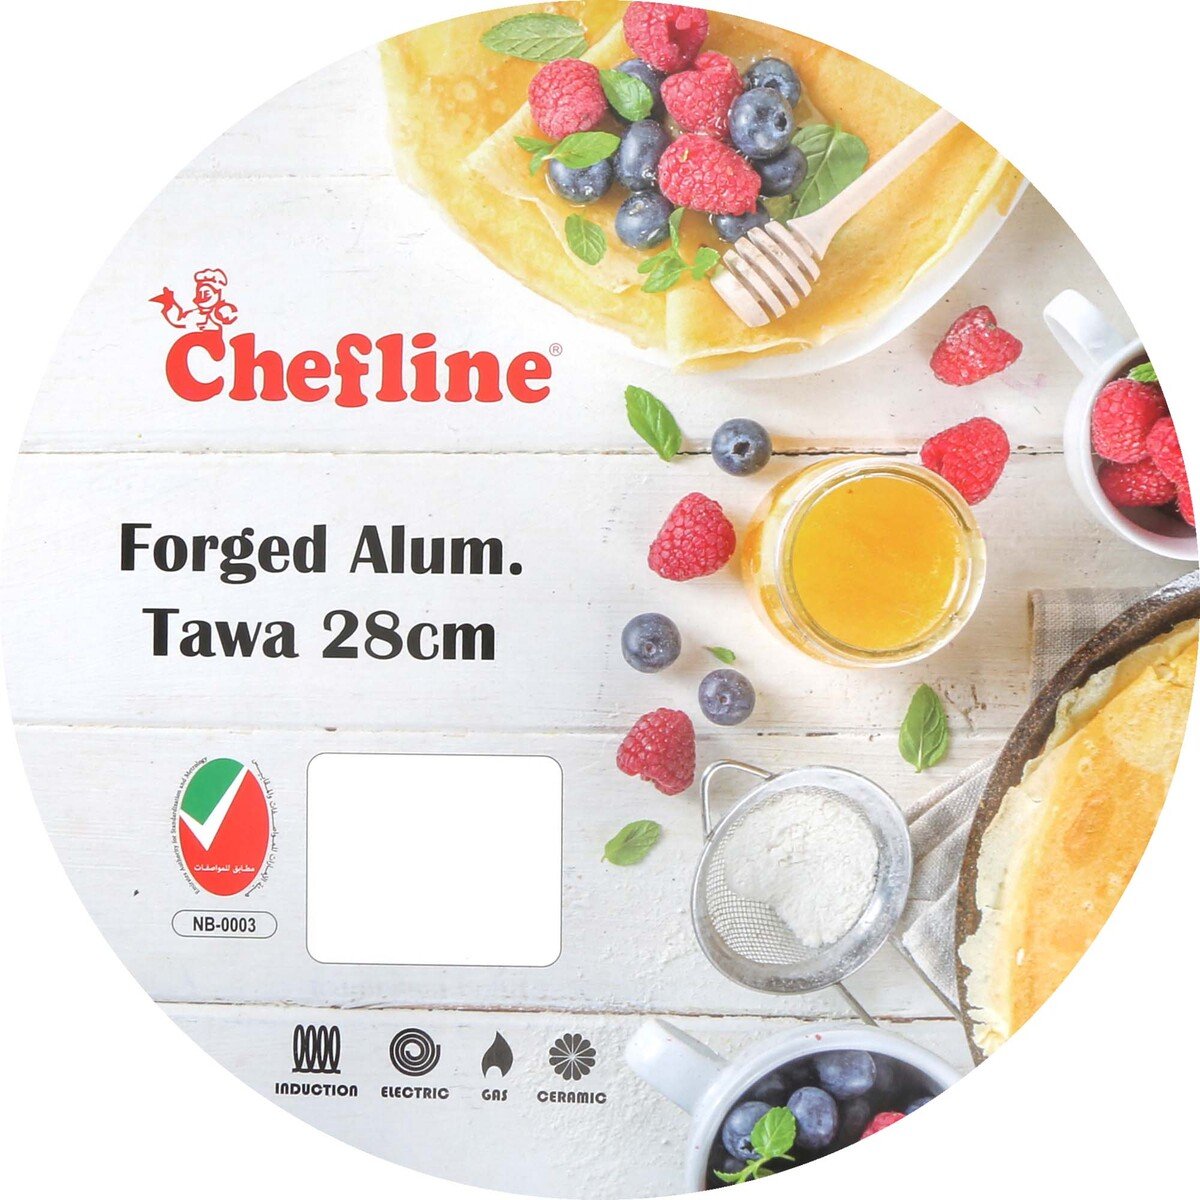 Chefline Forged Aluminium Tawa 28cm MK728